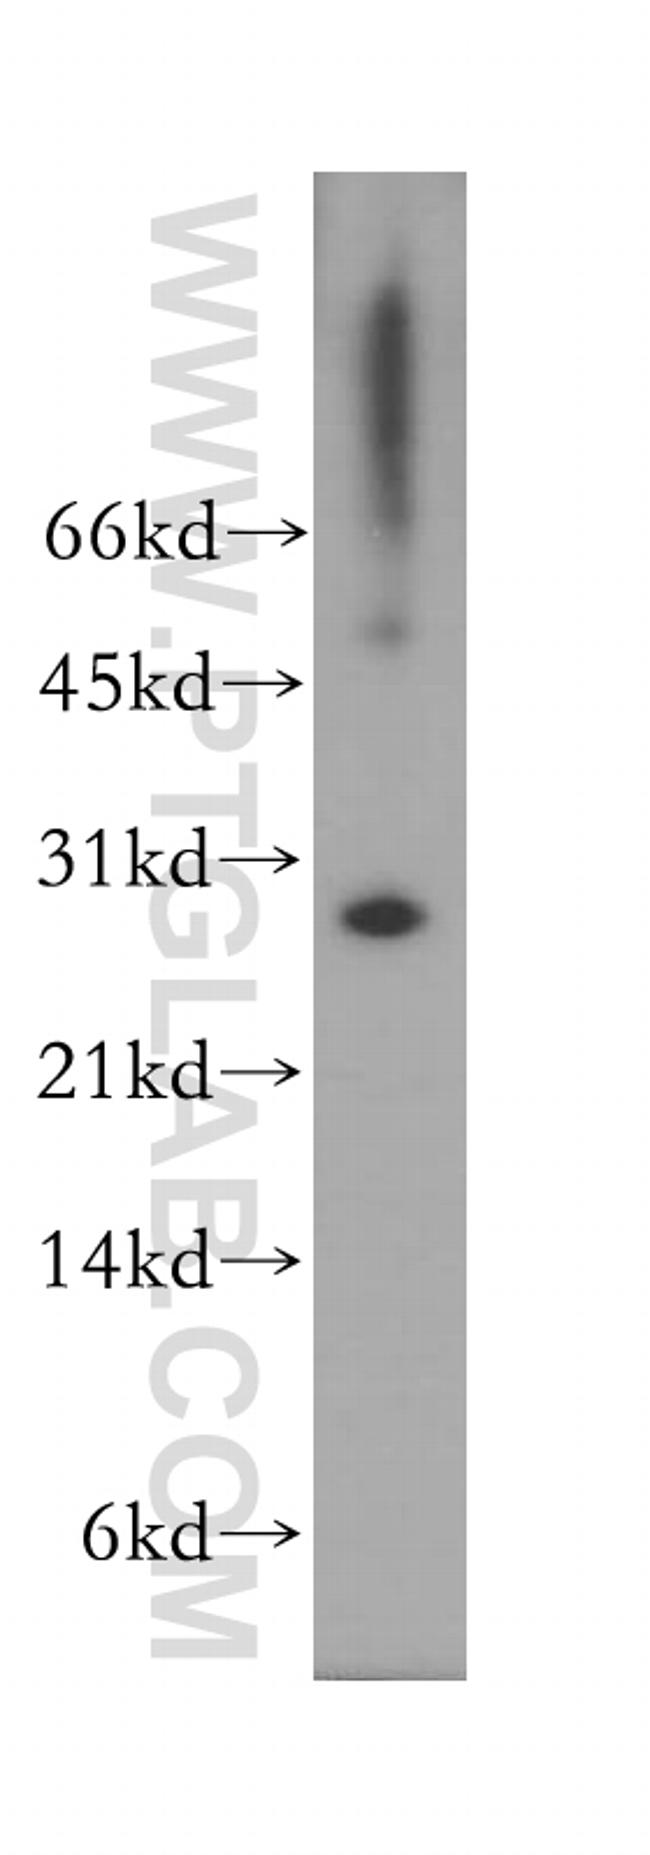 SNAP29 Antibody in Western Blot (WB)